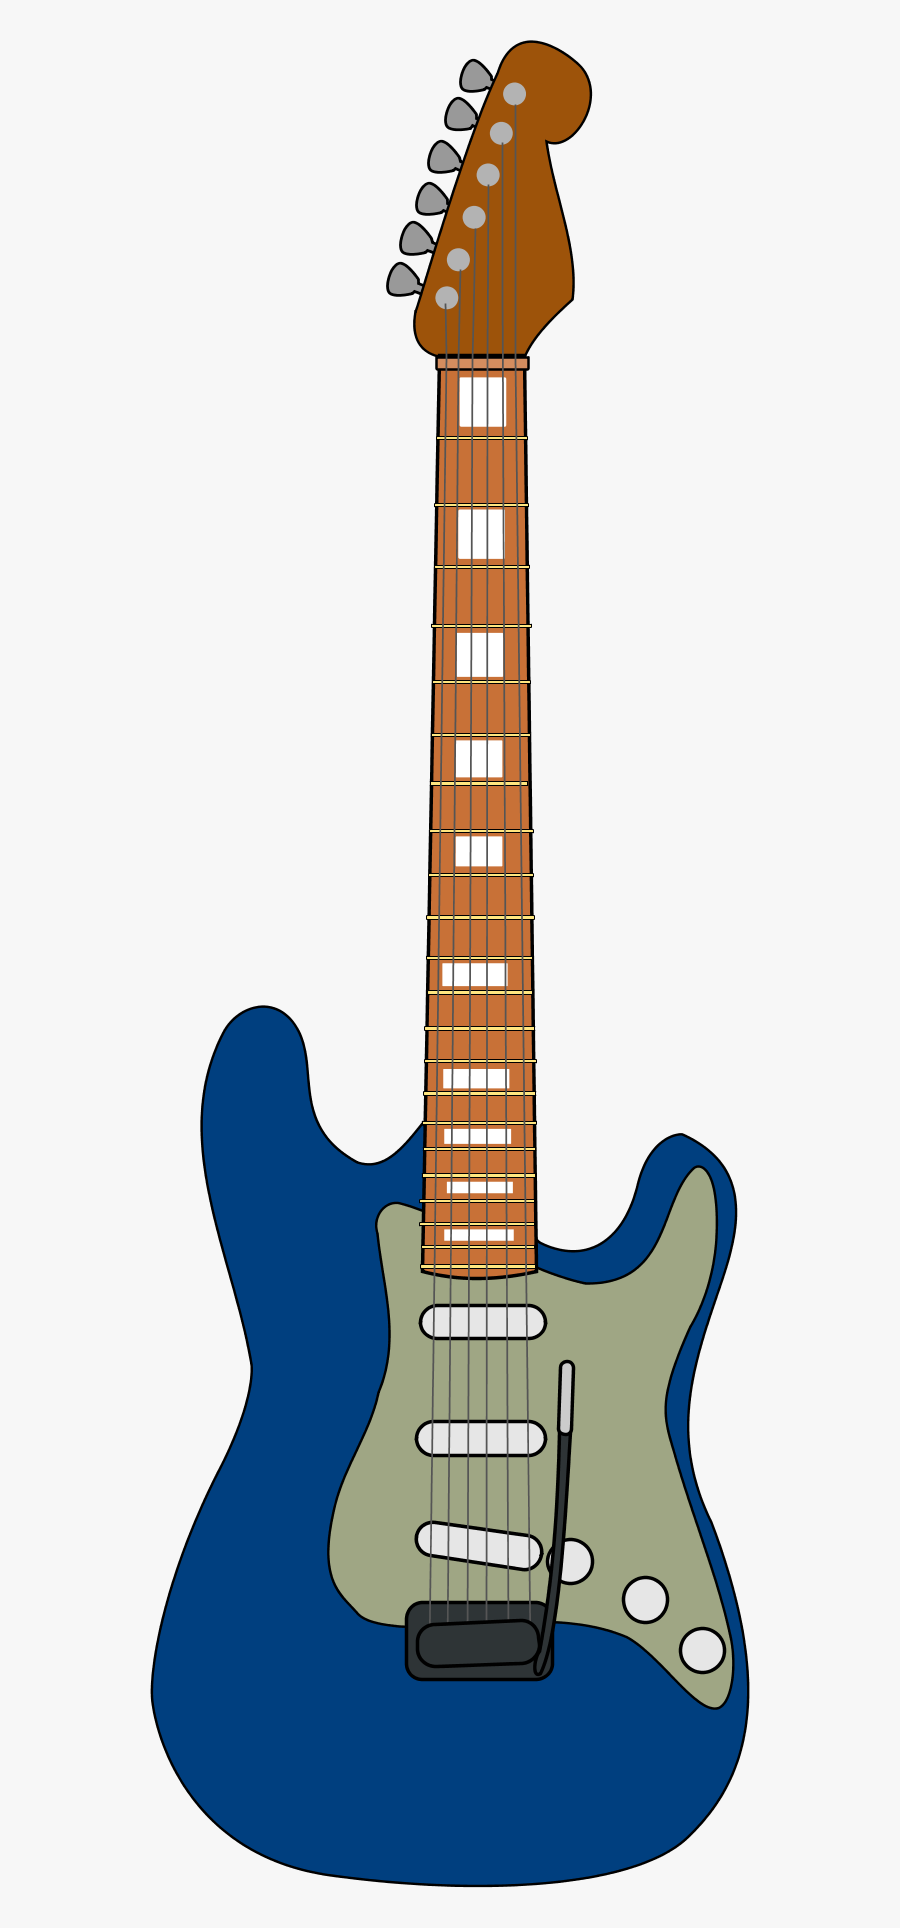 Wooden Guitar Vector Clip Art - Electric Guitar Clipart, Transparent Clipart